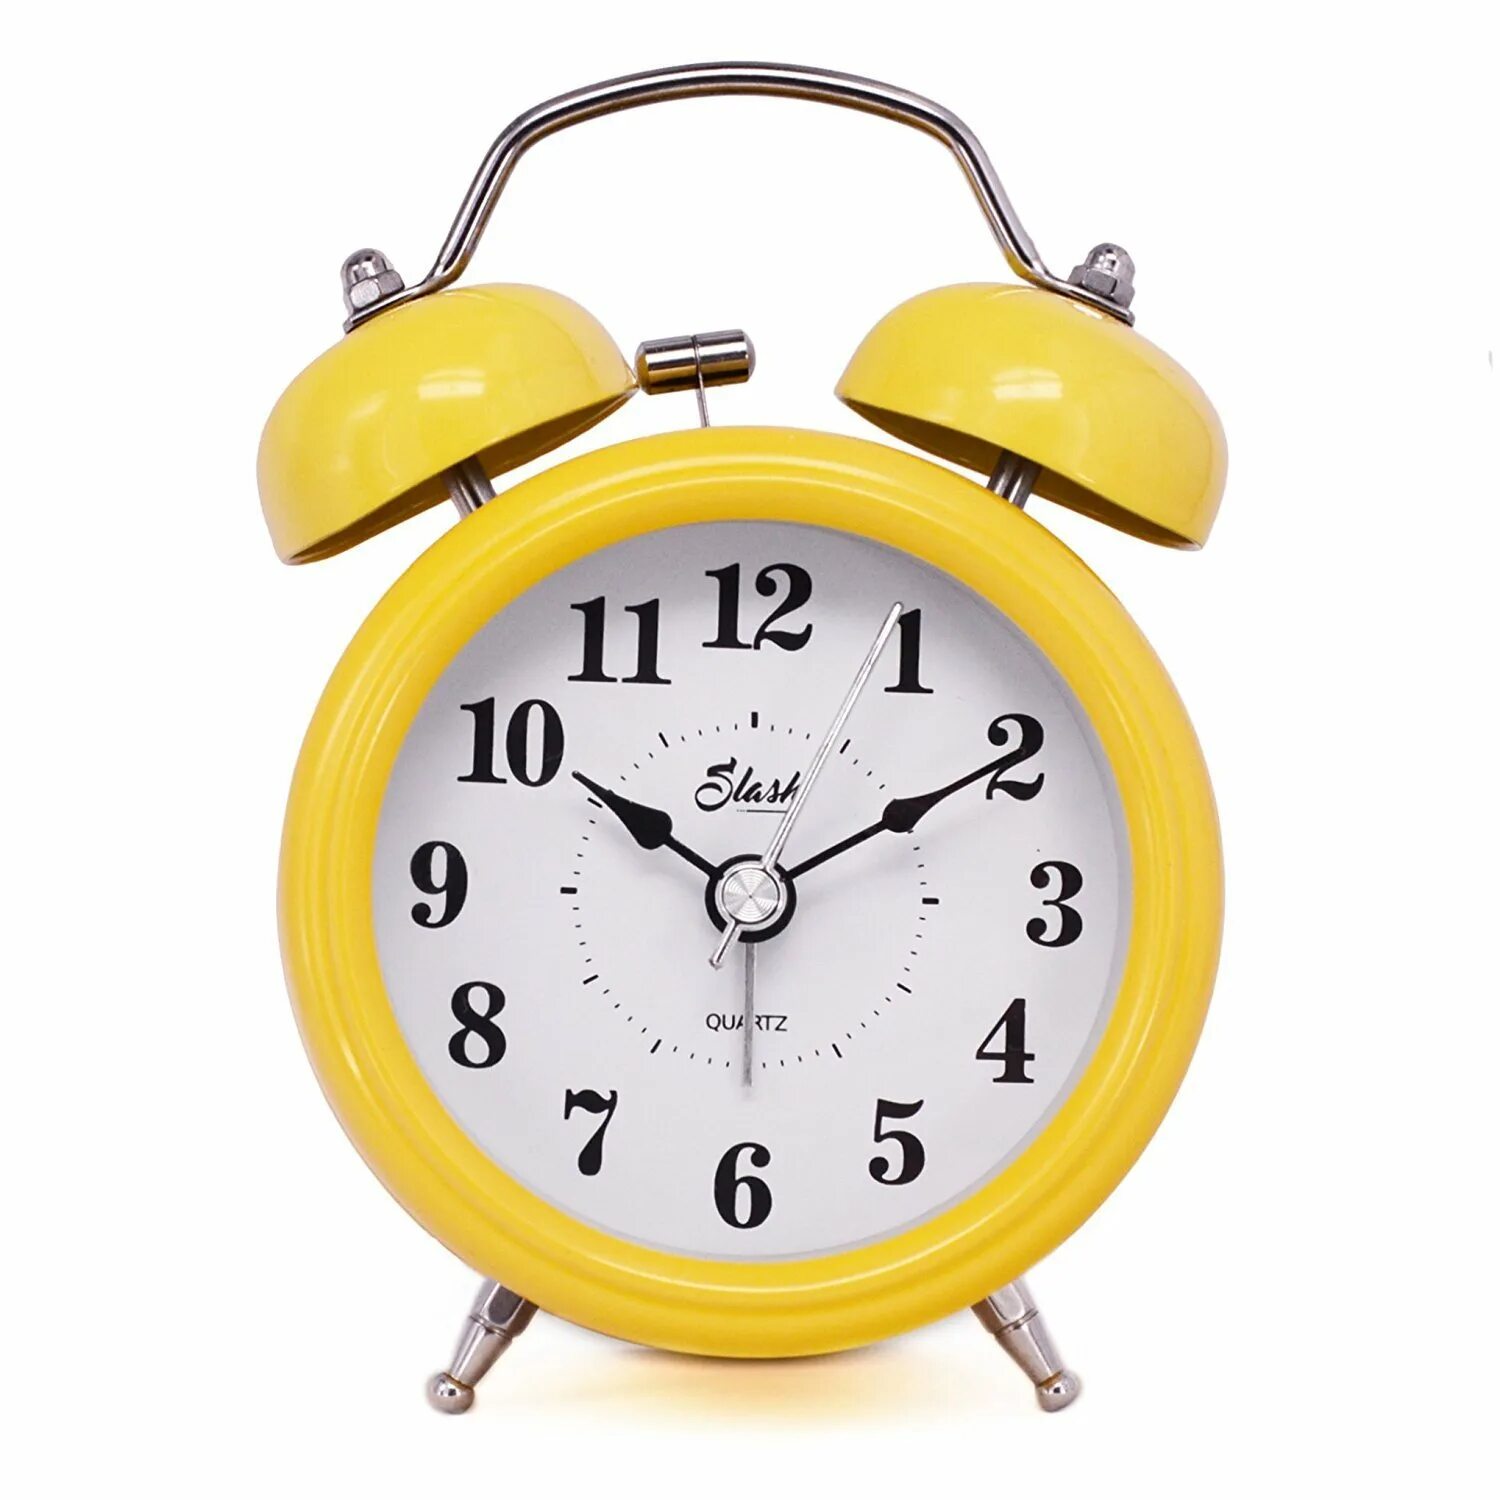 Фотка будильника. Будильник Аларм клок. Бульник. Часы будильник, желтый. Часы желтые.